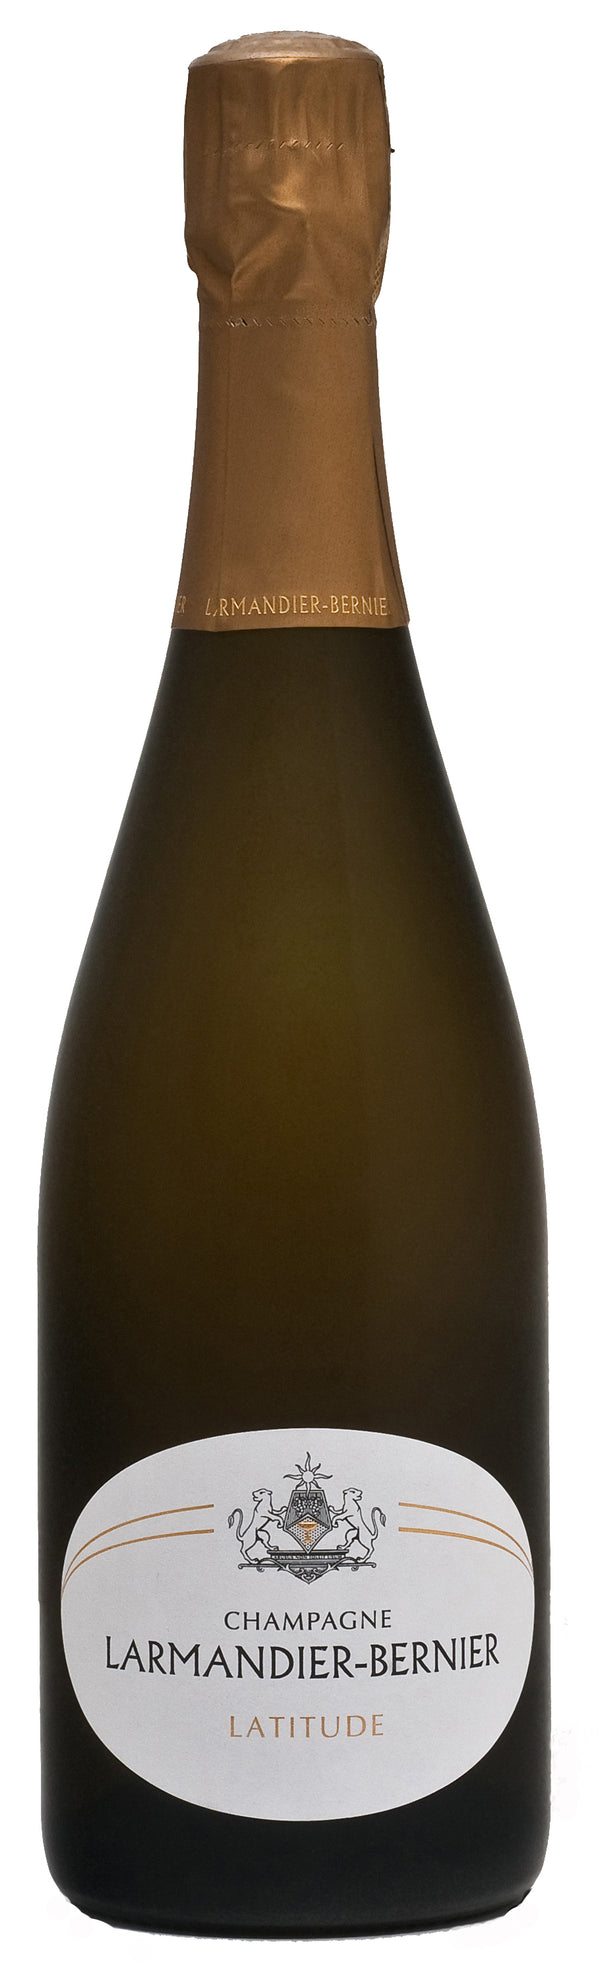 Champagne Larmandier-Bernier Latitude Blanc de Blancs NV (Base 19. Disg. Dec 2021)